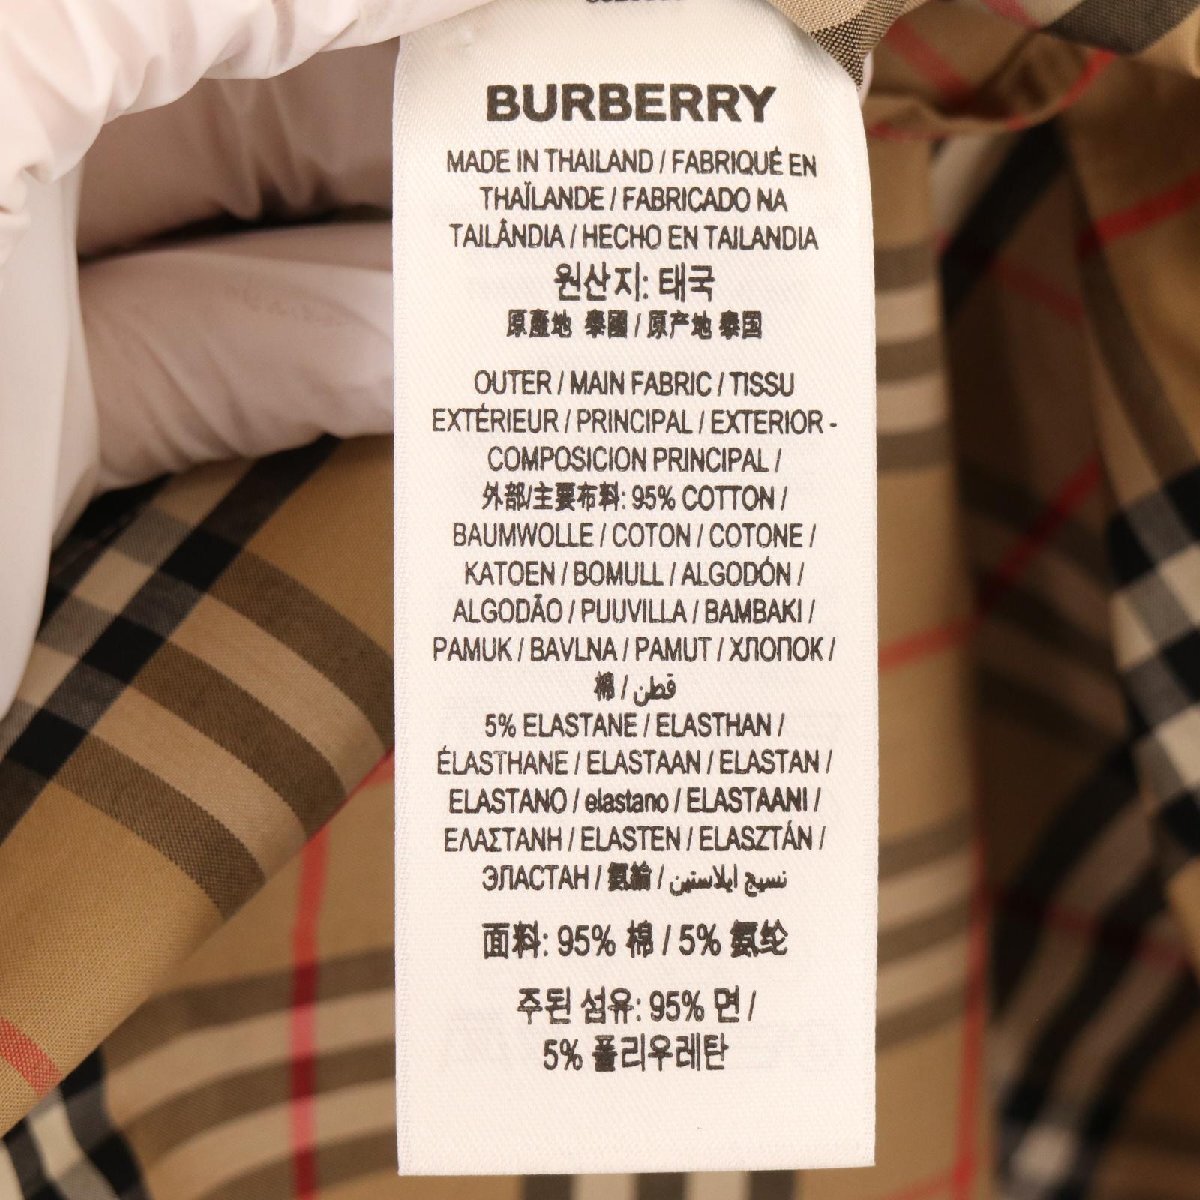 BURBERRY バーバリー ヴィンテージチェック 8020966 コットン ロングスリーブシャツ キャメル XS トップス コットン メンズ 中古_画像6